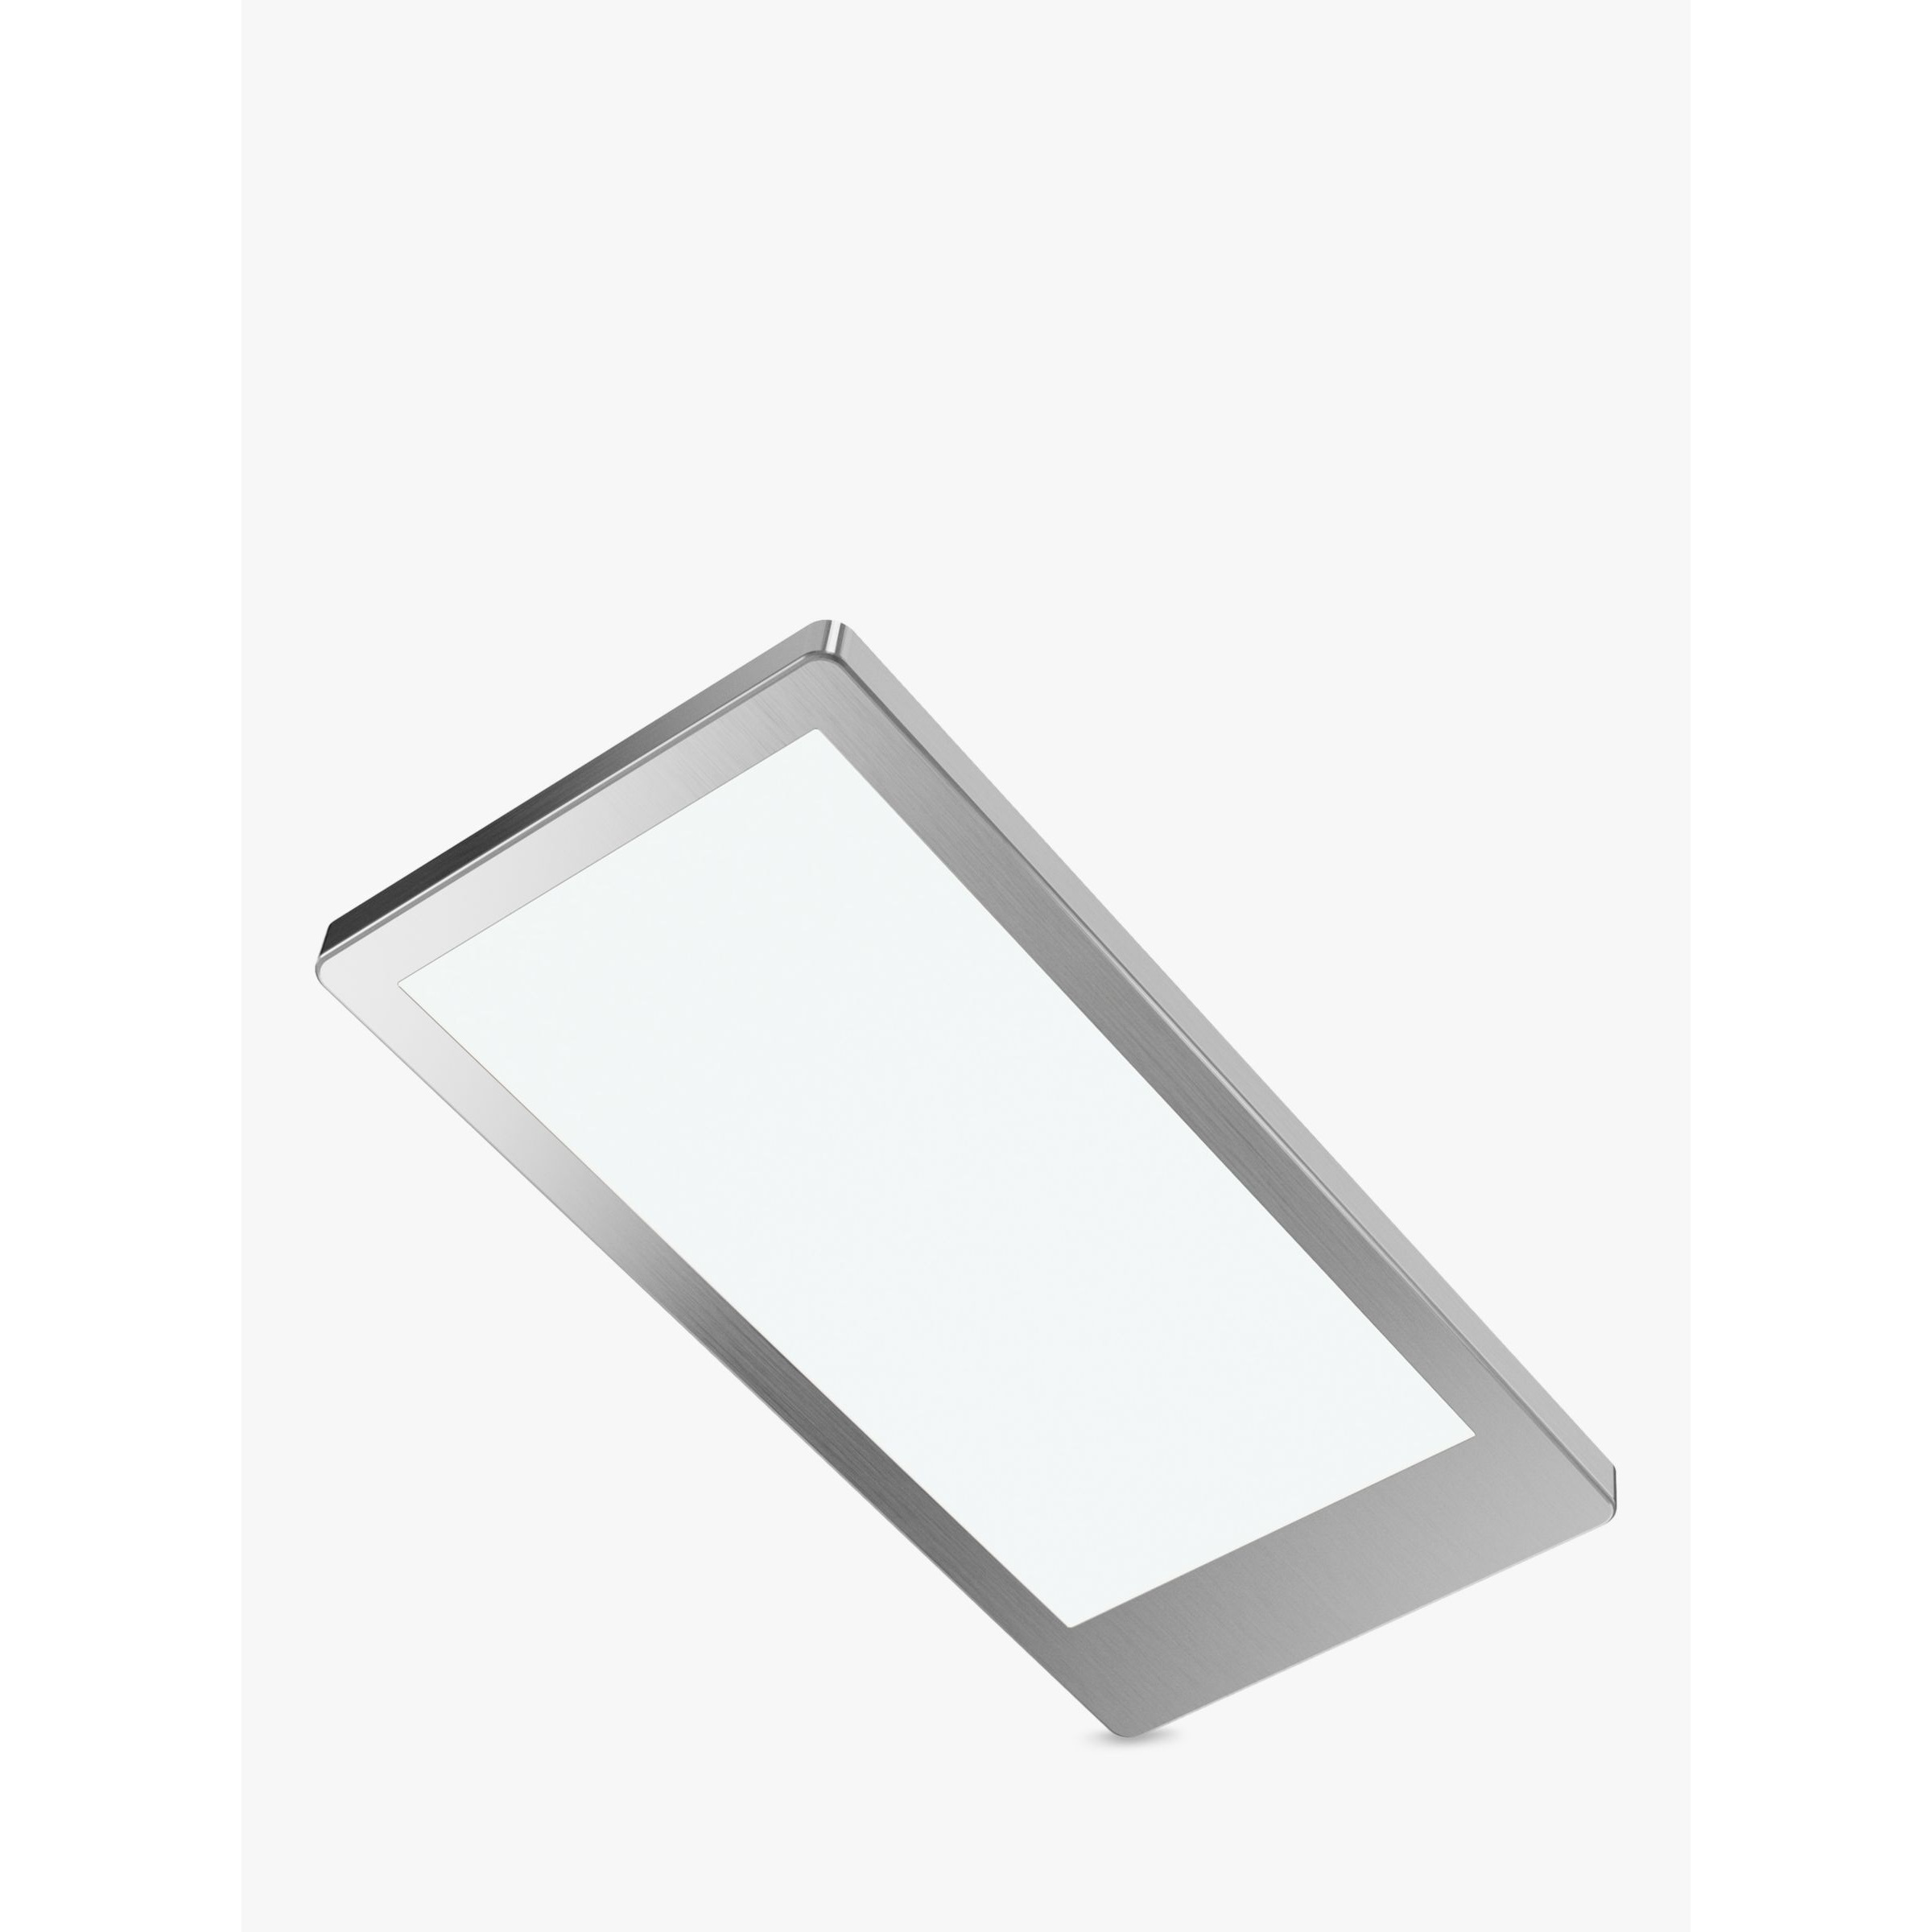 Sensio Neo LED Trio Tone Under Kitchen Cabinet Light, White - image 1